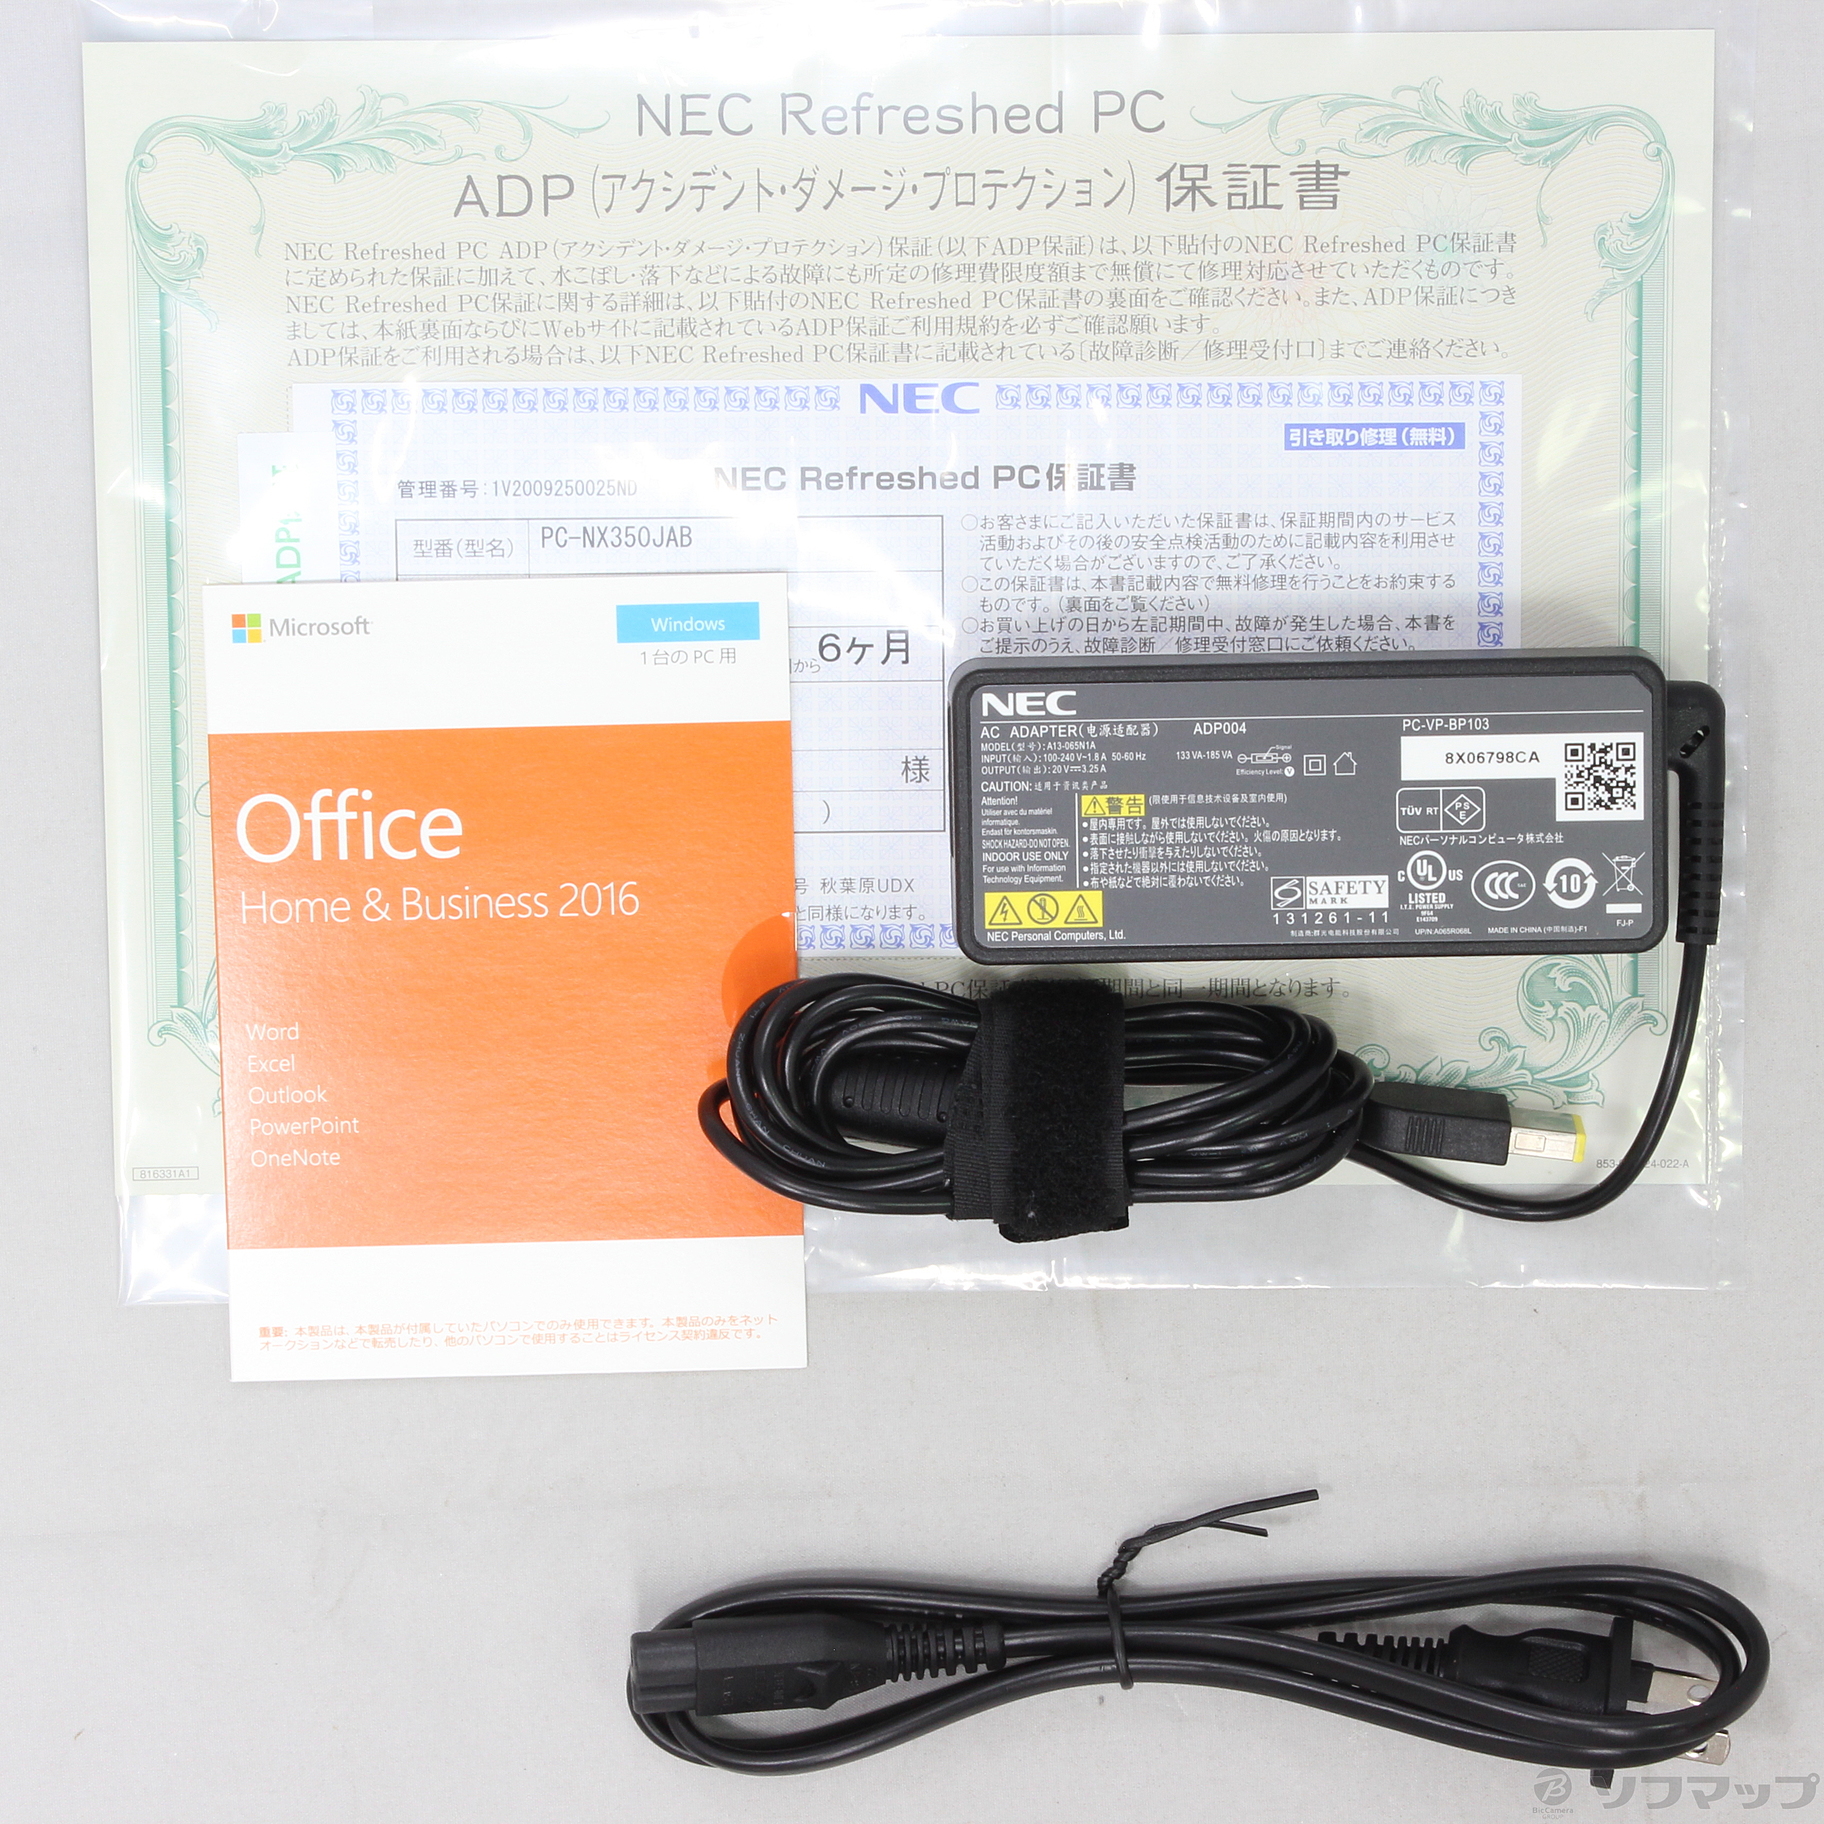 LaVie Note NEXT PC-NX350JAB グレイスブラックシルバー 〔NEC Refreshed PC〕 〔Windows 10〕  〔Office付〕 ≪メーカー保証あり≫ ◇05/21(金)値下げ！